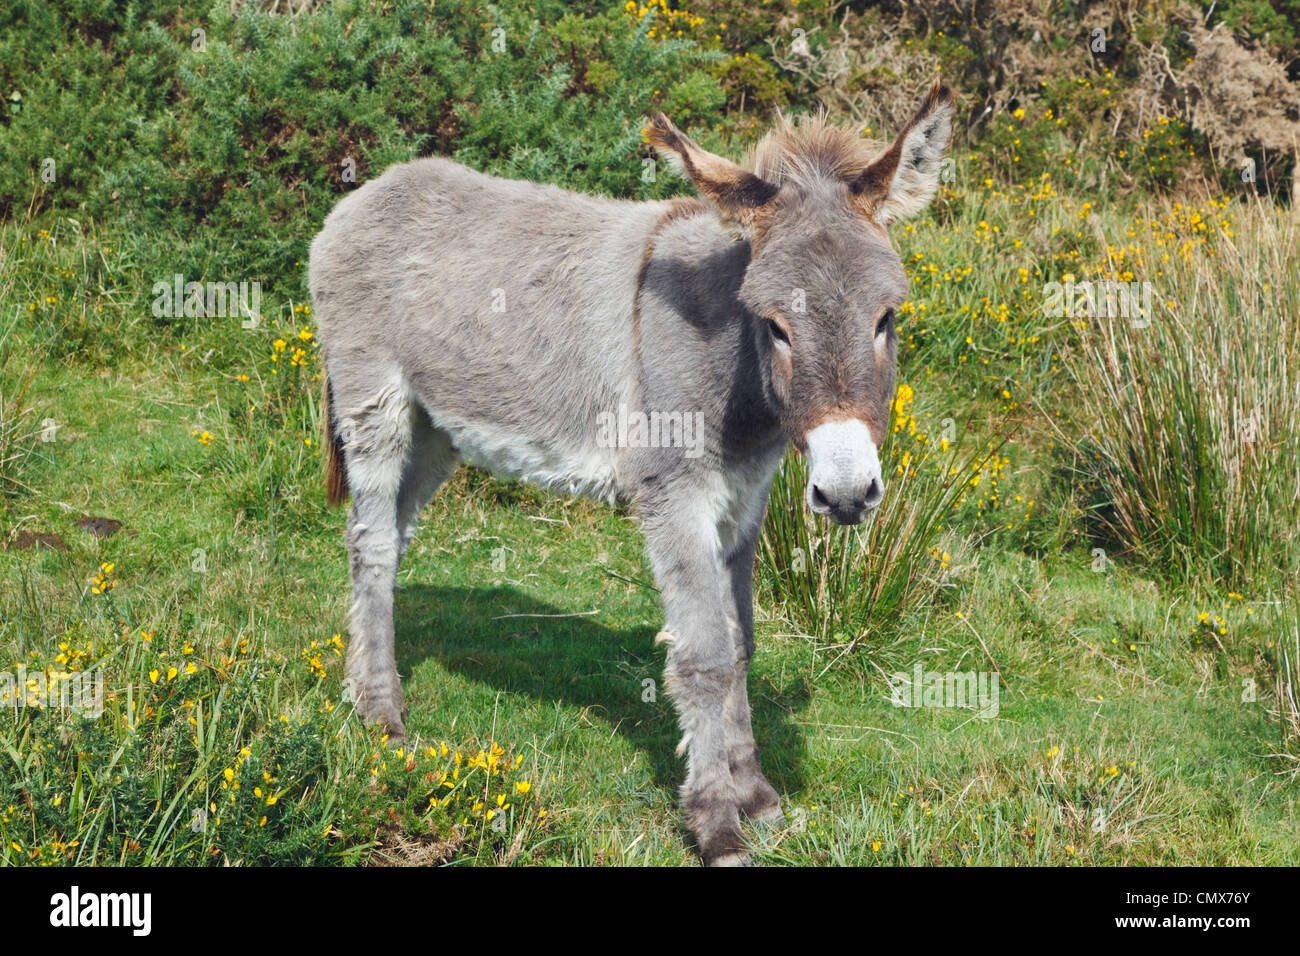 Baby donkey Stock Photo